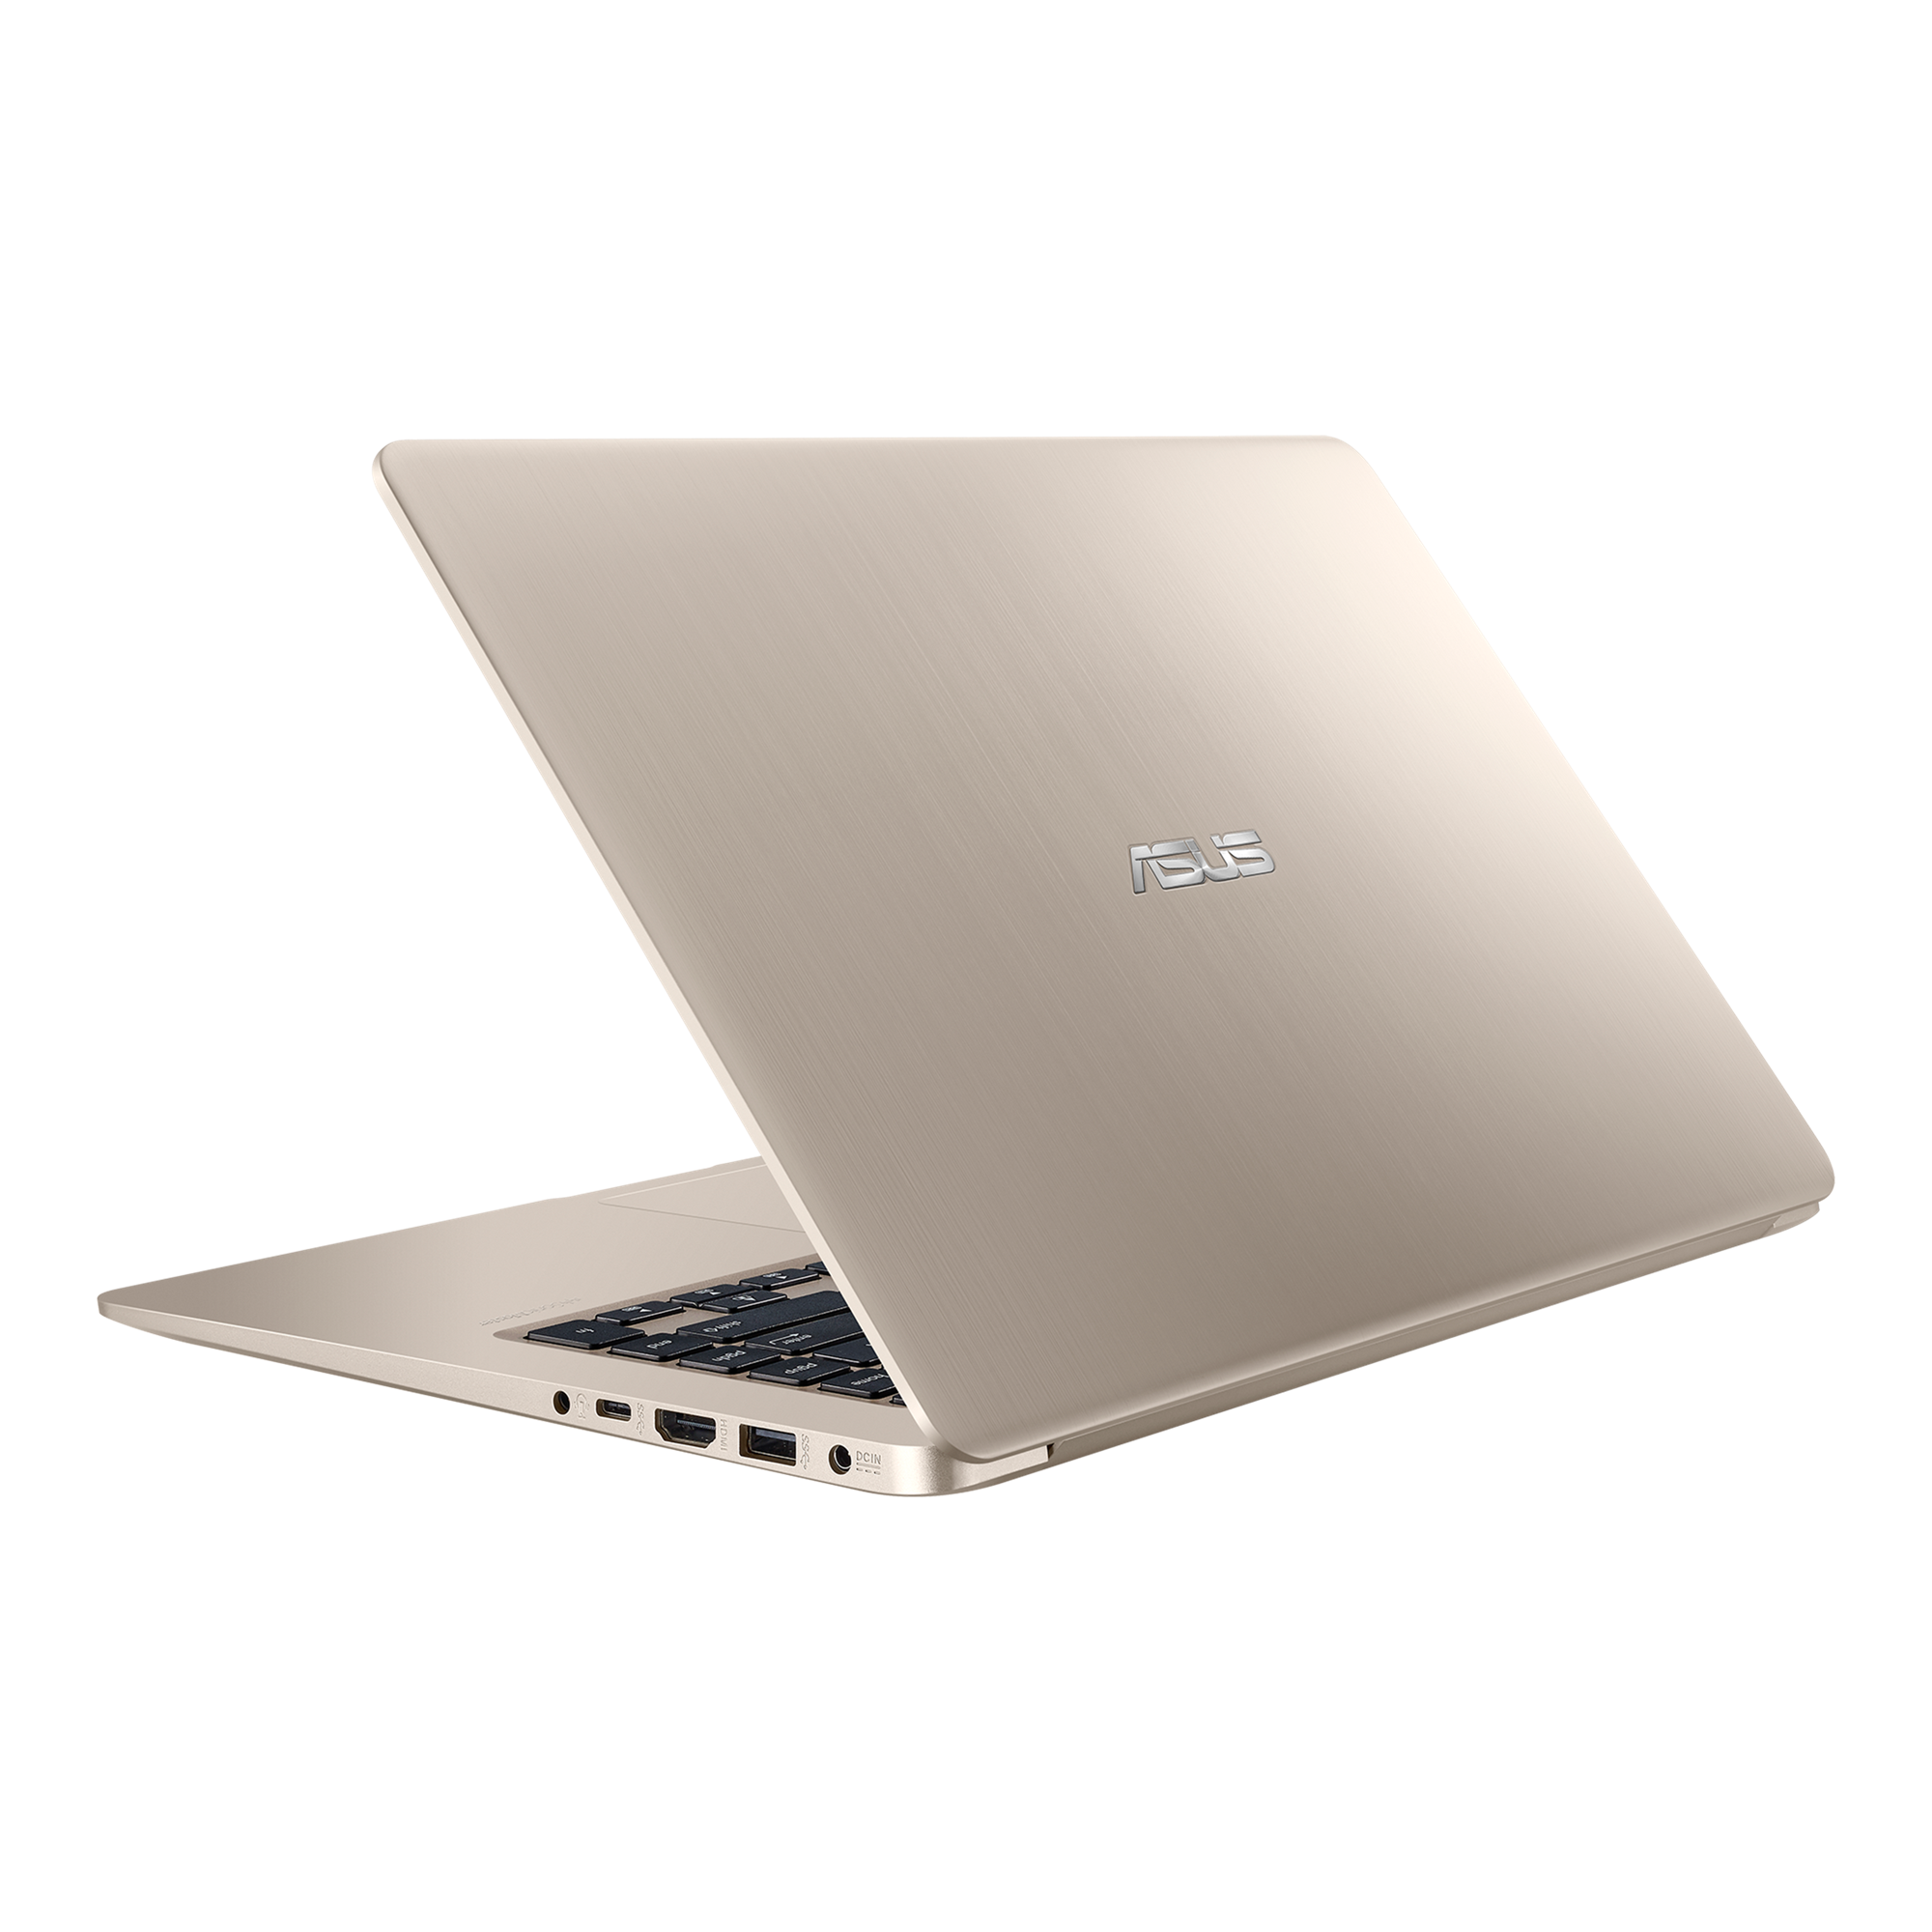 ASUS VivoBook S15 (S510) - i3-7100U · Intel HD Graphics 620 · 15.6